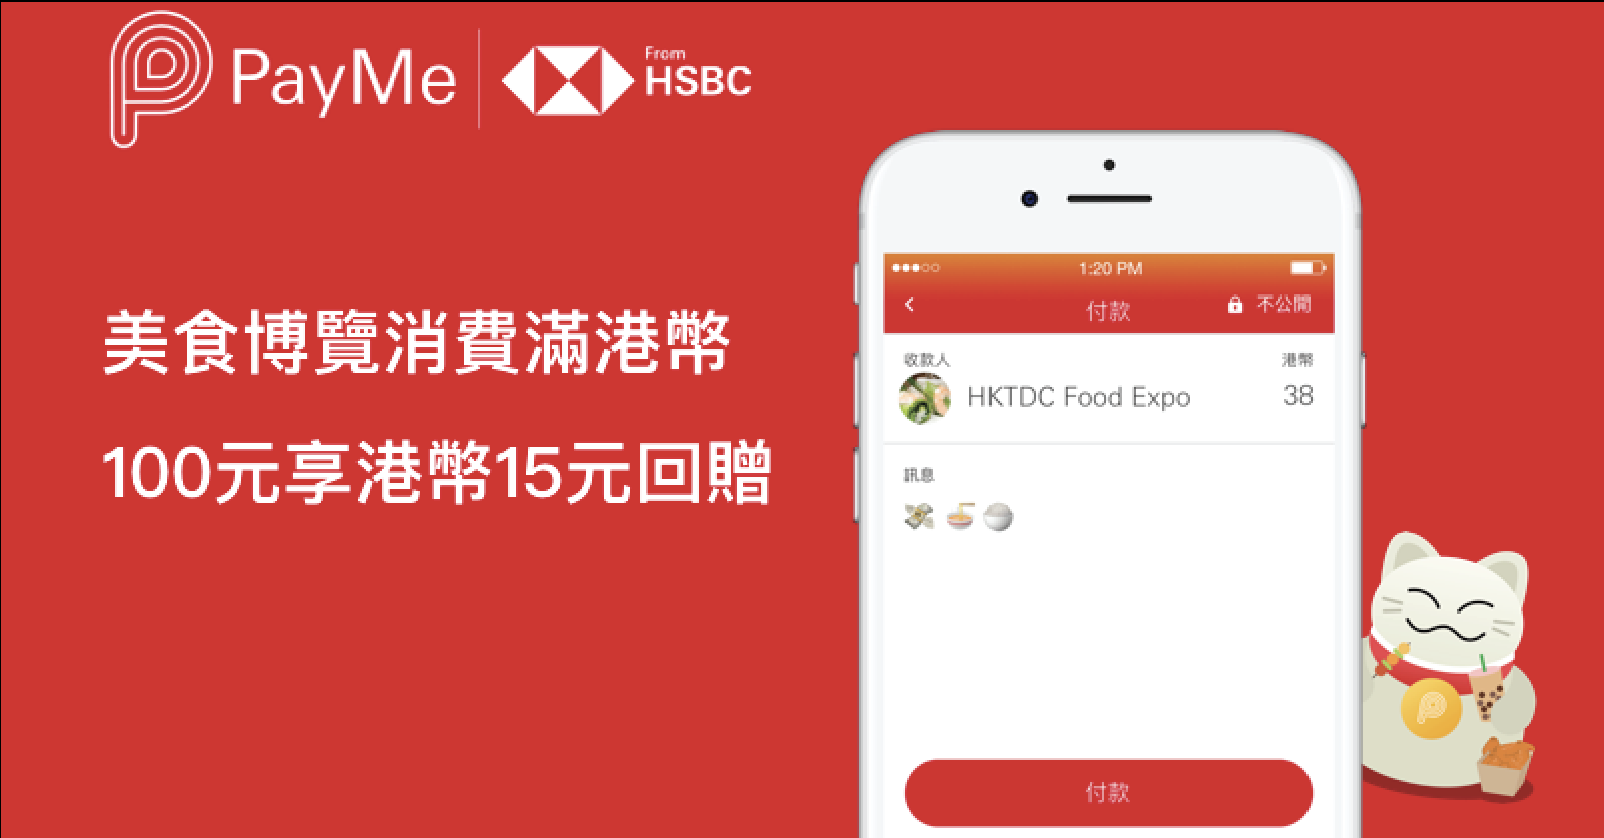 PayMe 優惠！美食博覽單一簽賬HKD100就回贈HKD15！每人可享5次！